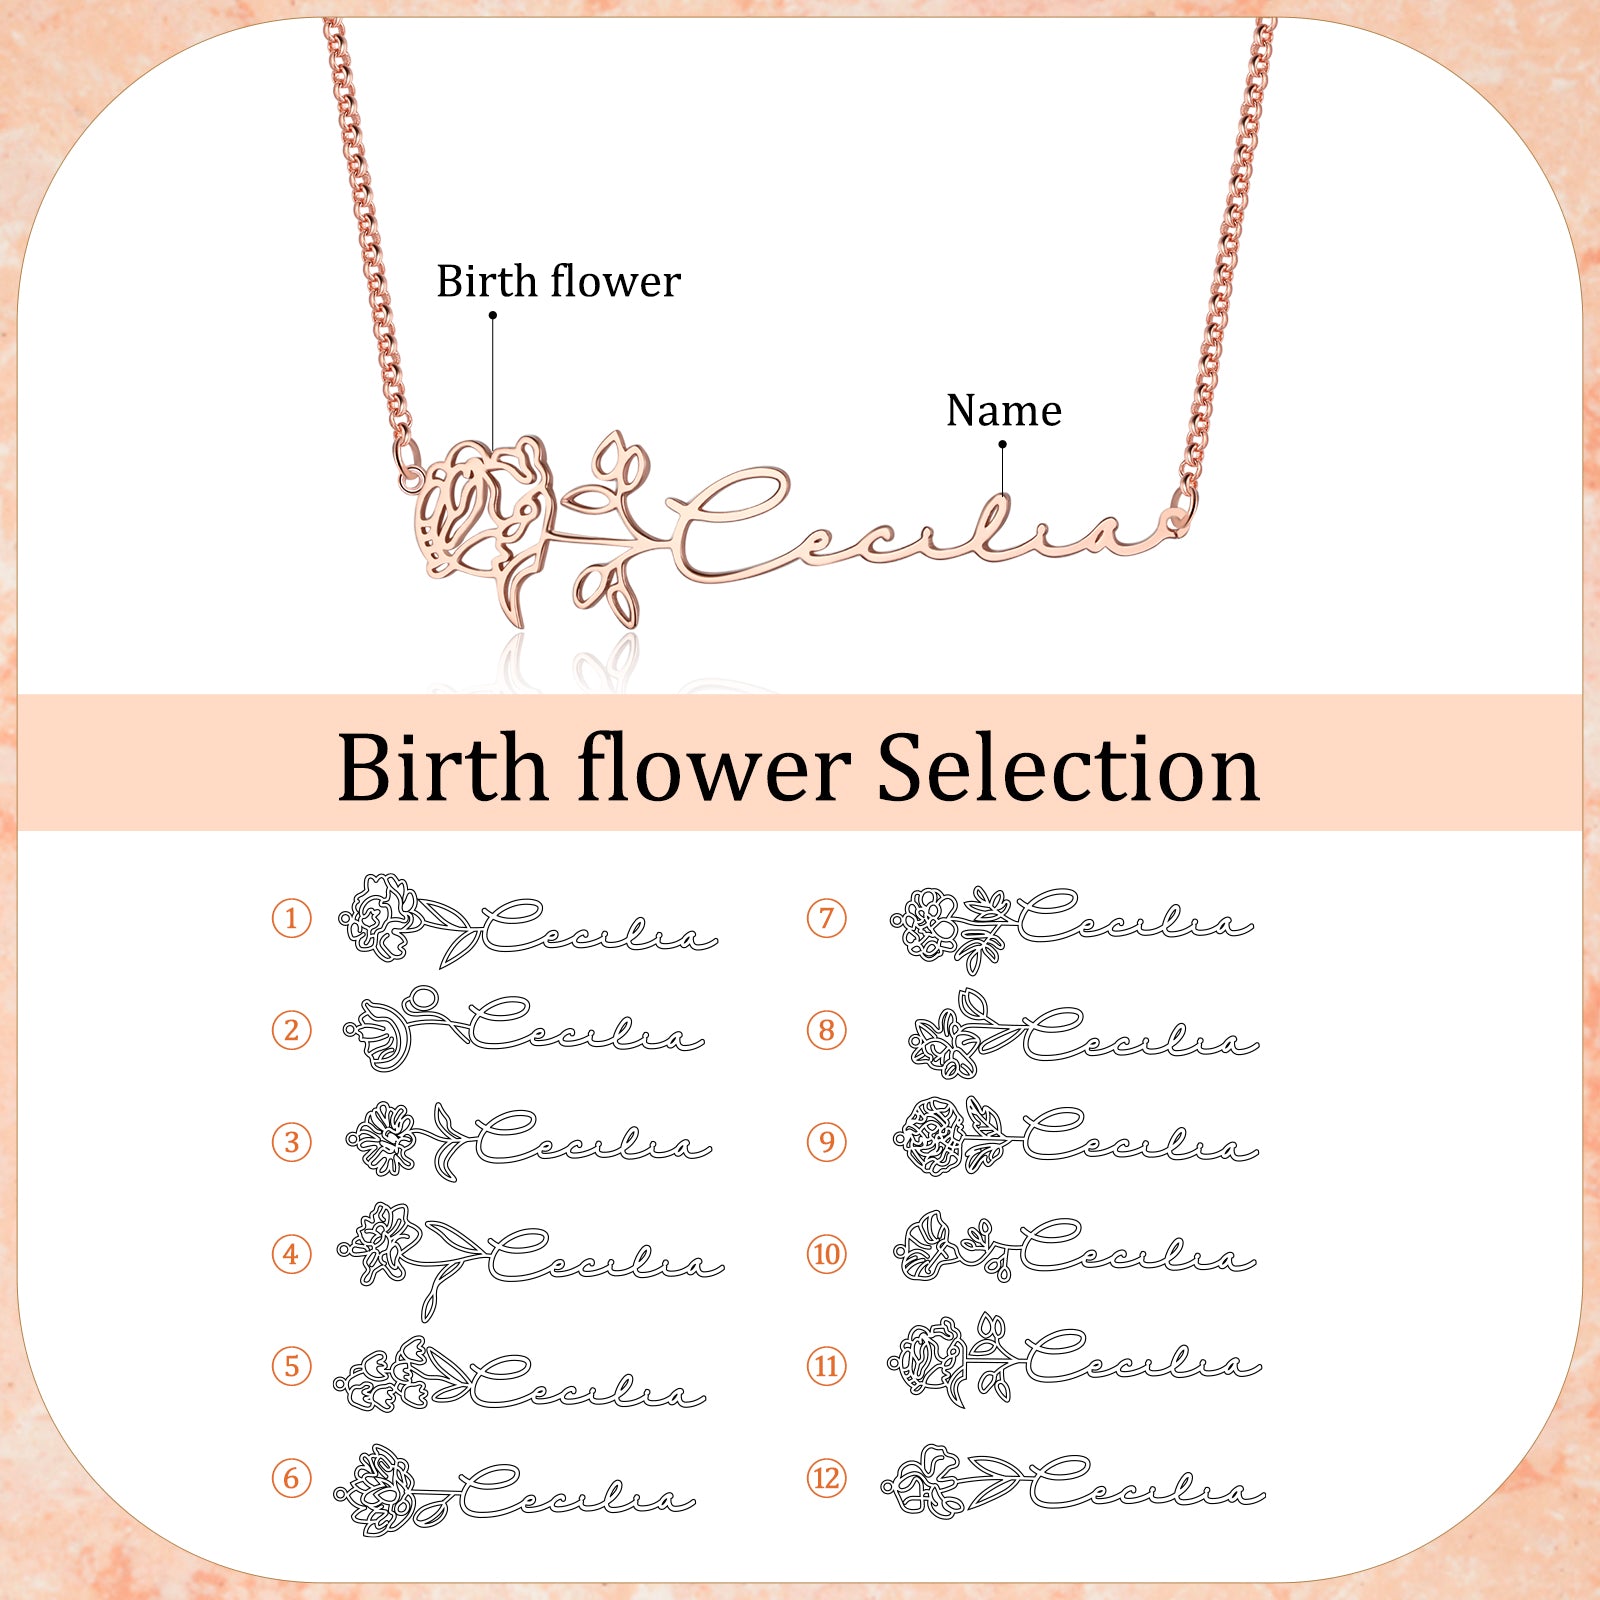 customized Name Birthflower Necklace